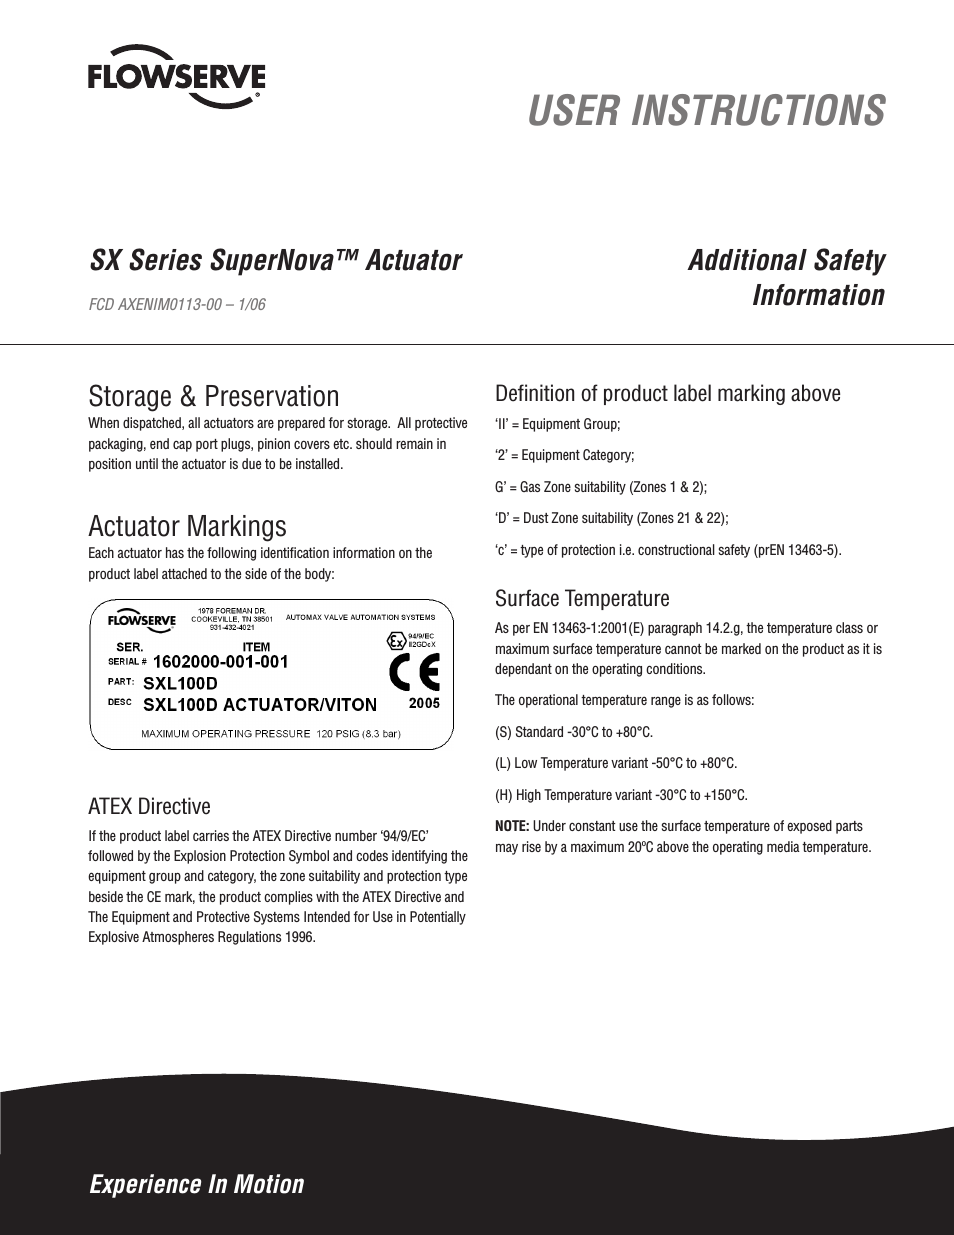 SX Series SuperNova Actuator